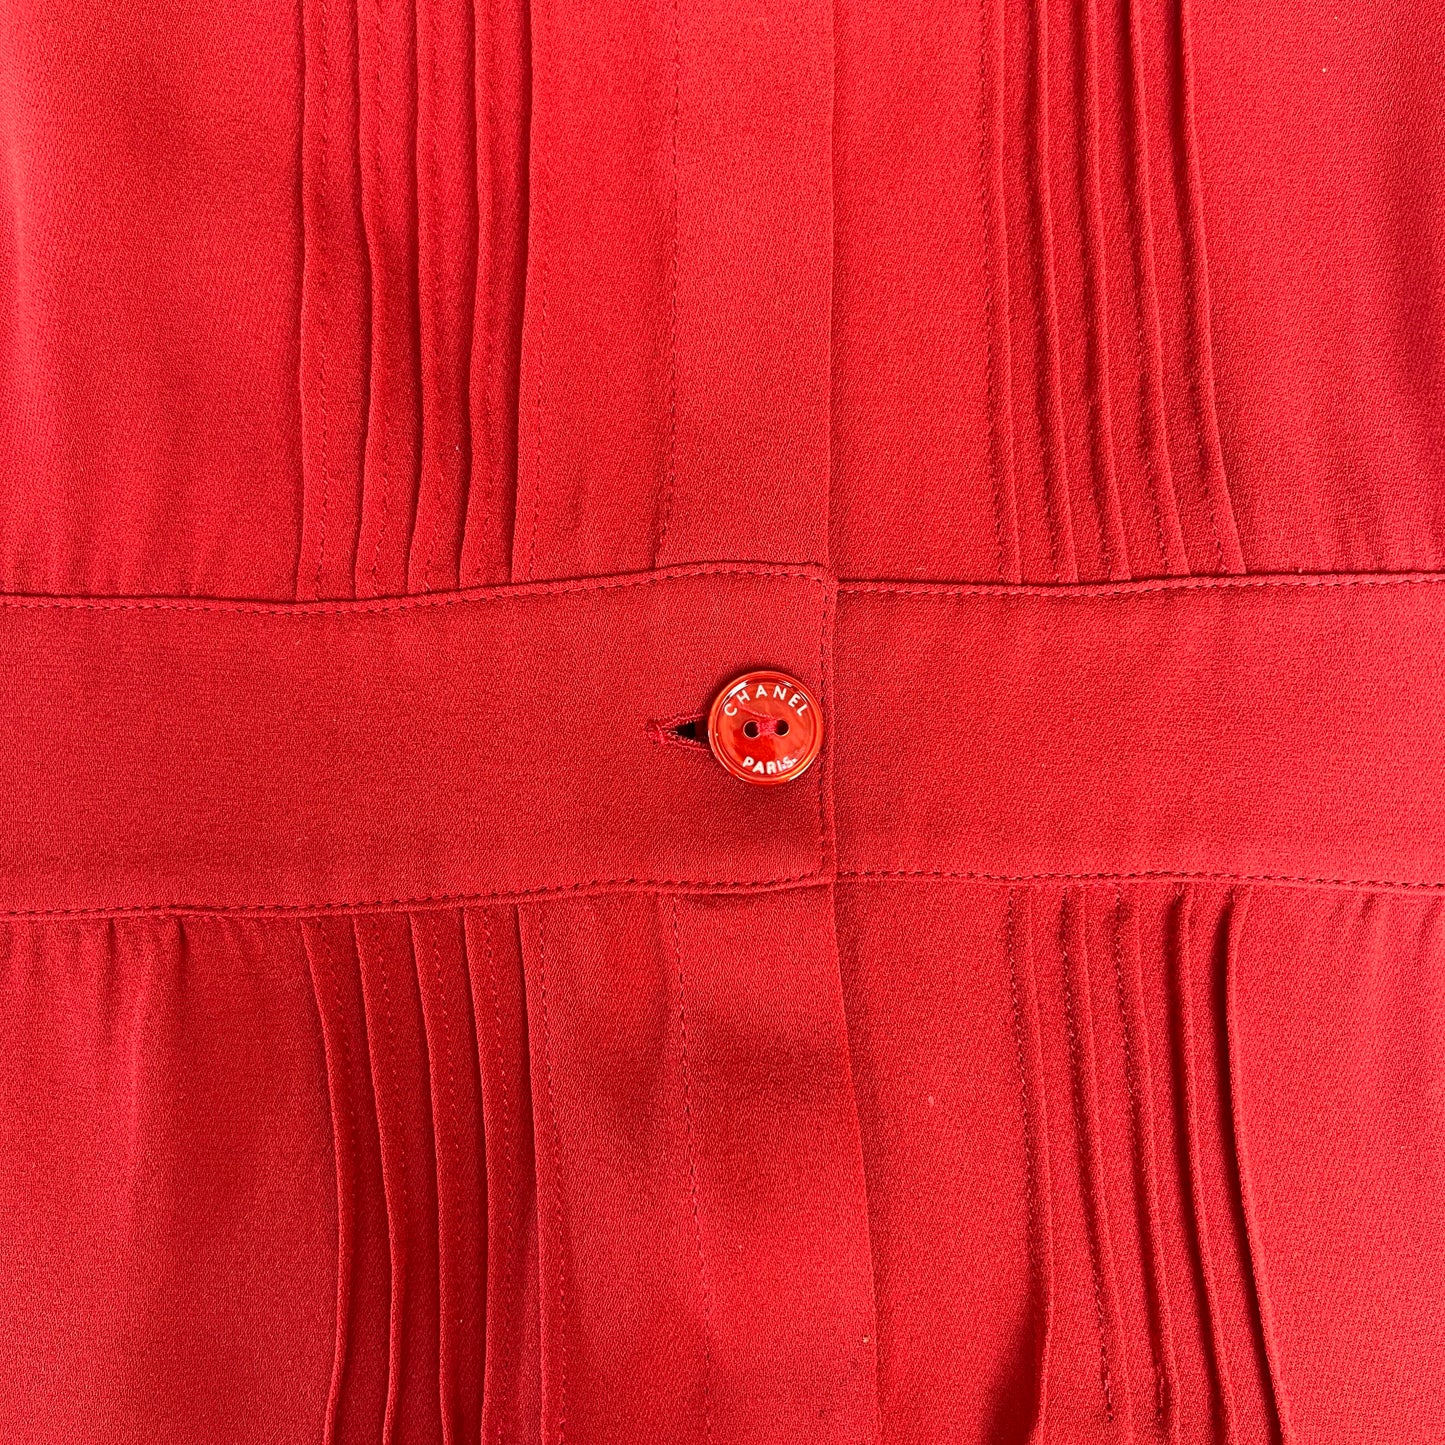 Vintage Red Silk Shirt - S